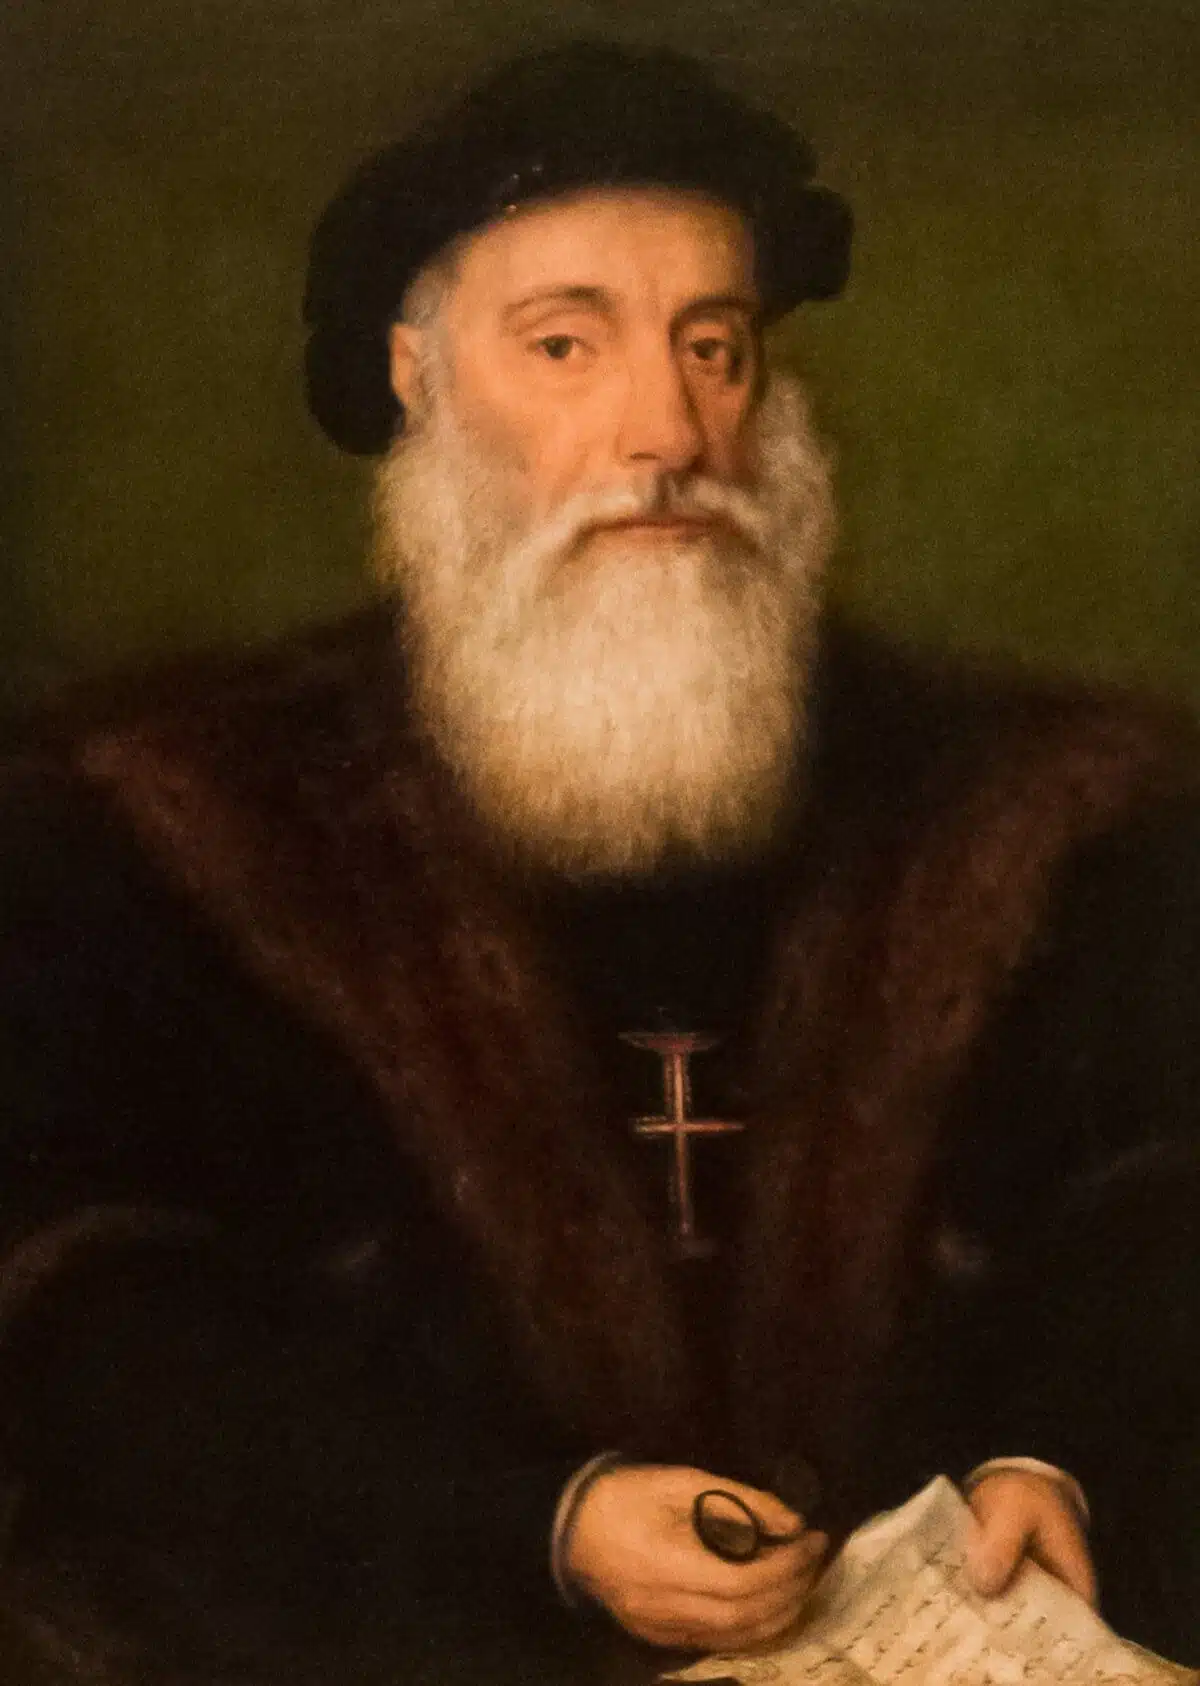 Vasco da Gama, the first famous explorer of world history on this list!